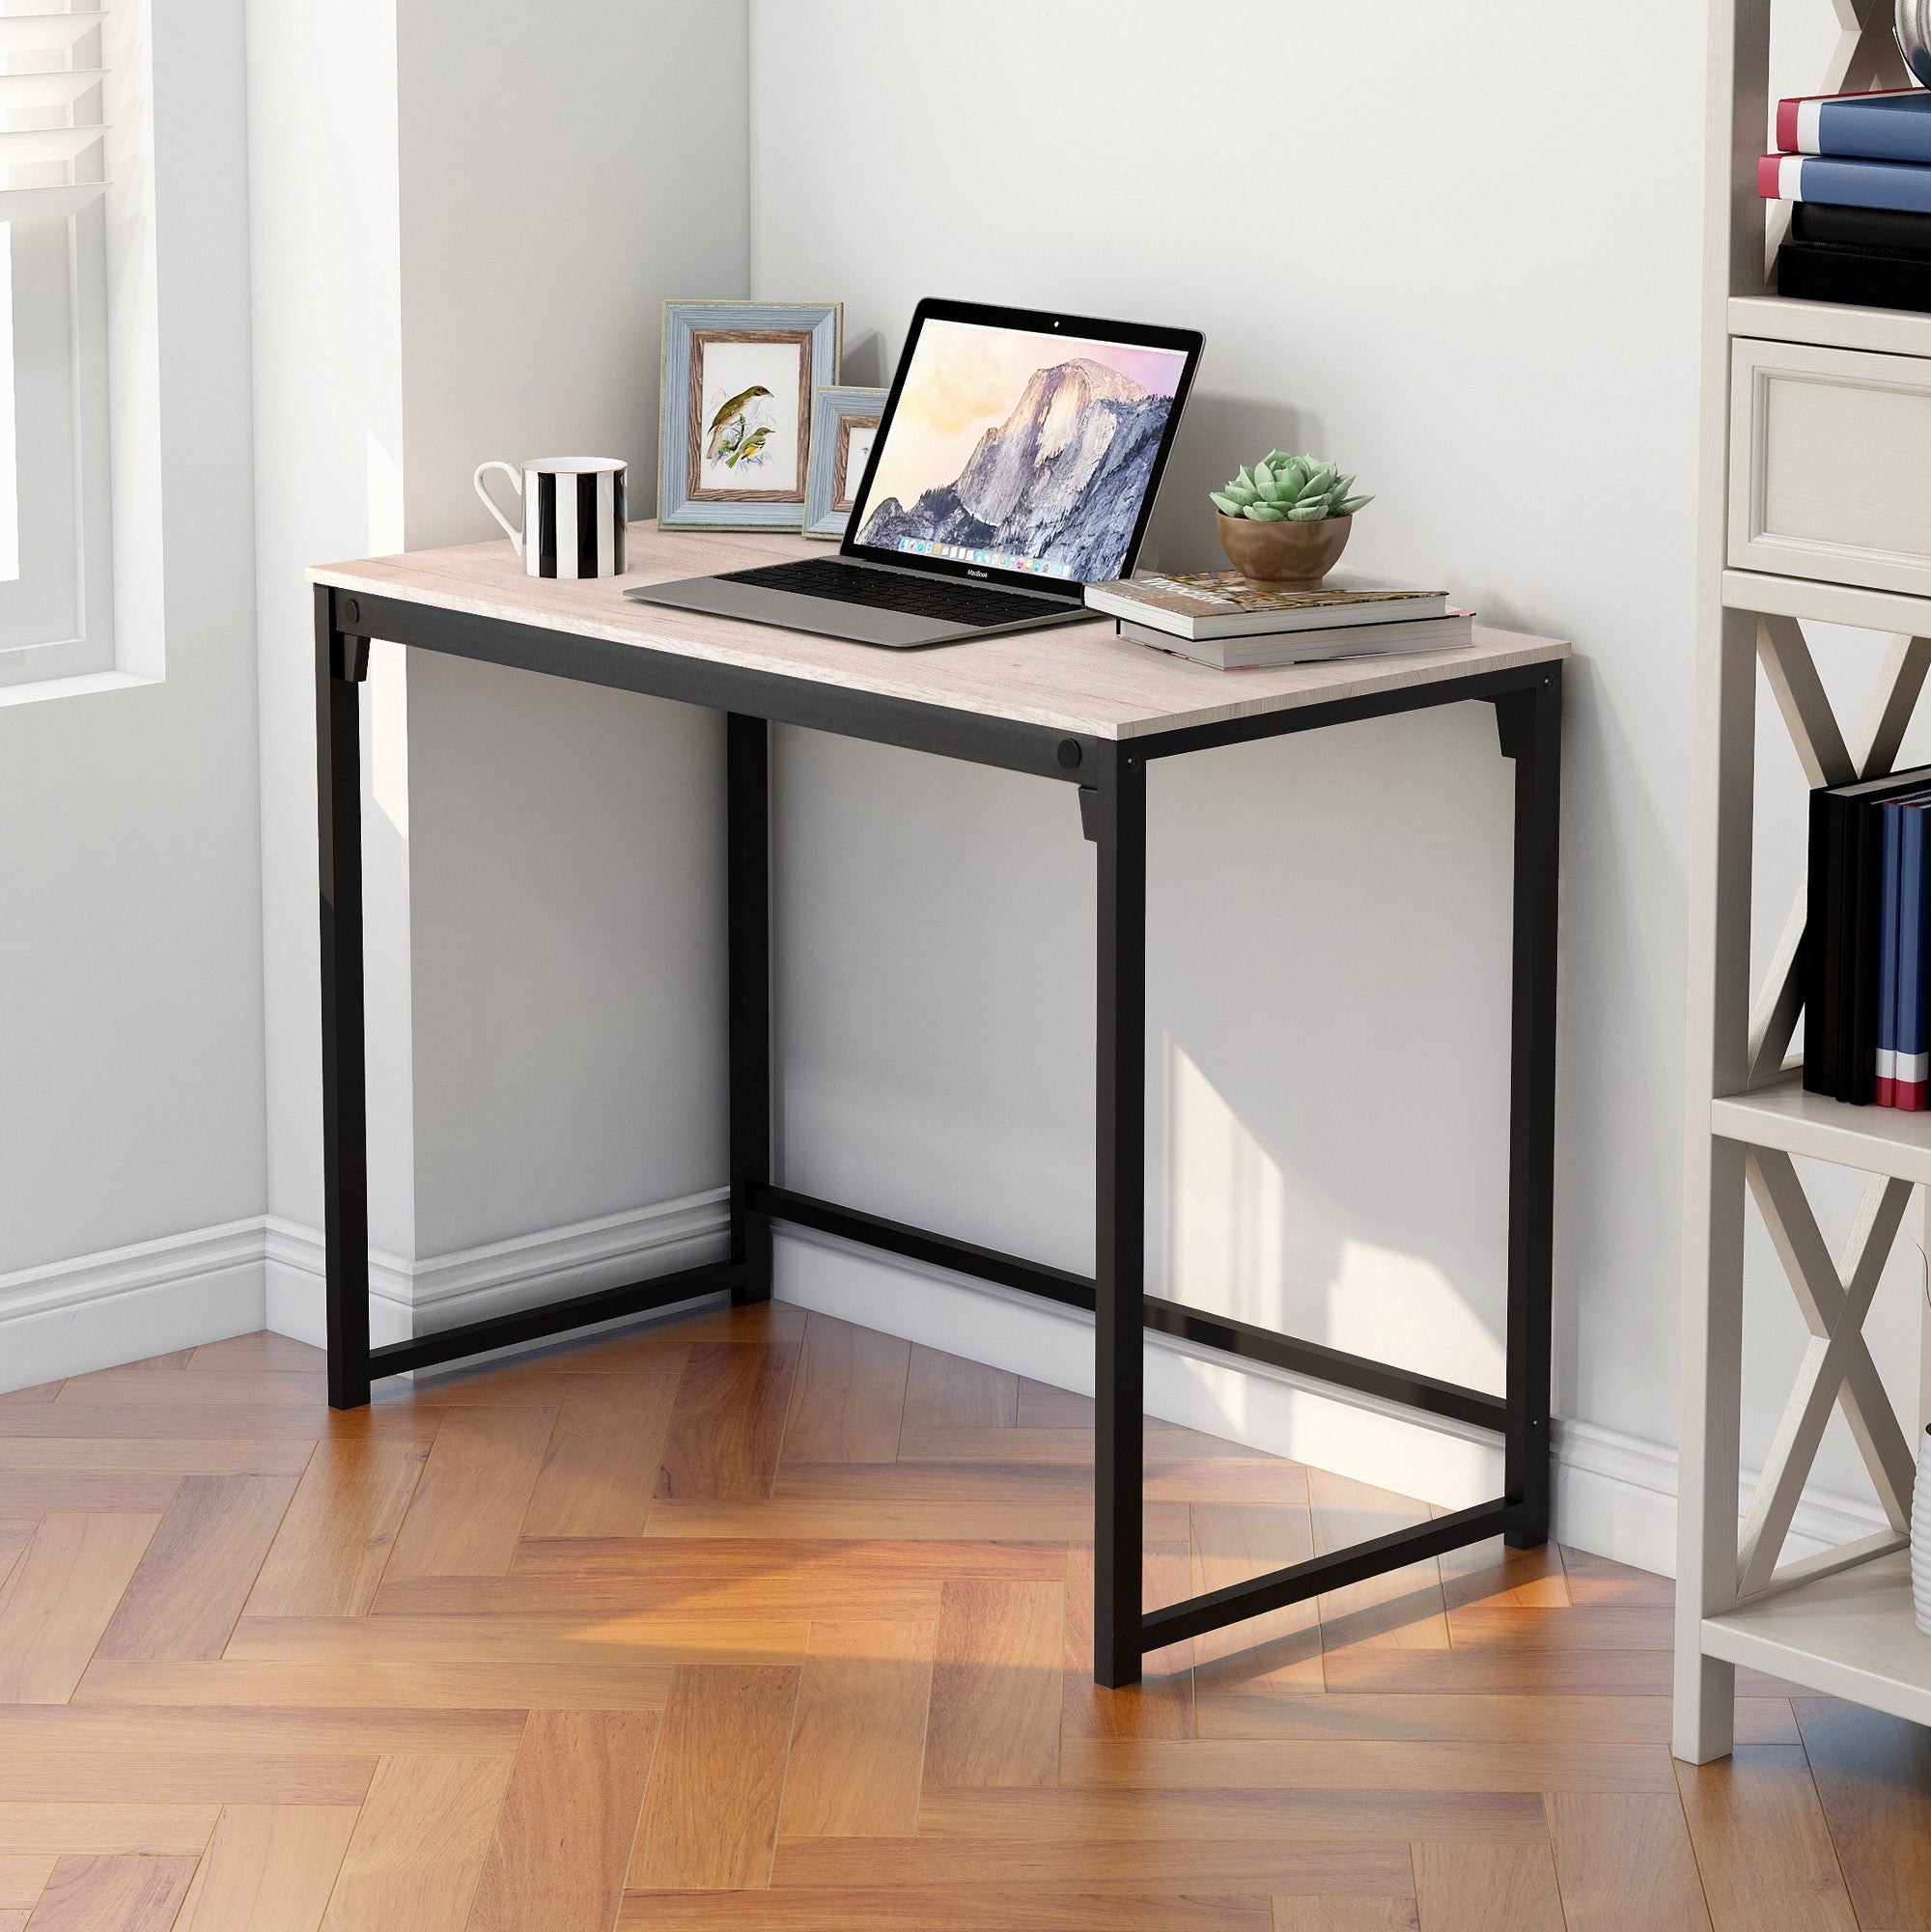 RaDEWAY Computer Desk, Modern Simple Style Desk for Home Office, Sturdy Writing Desk